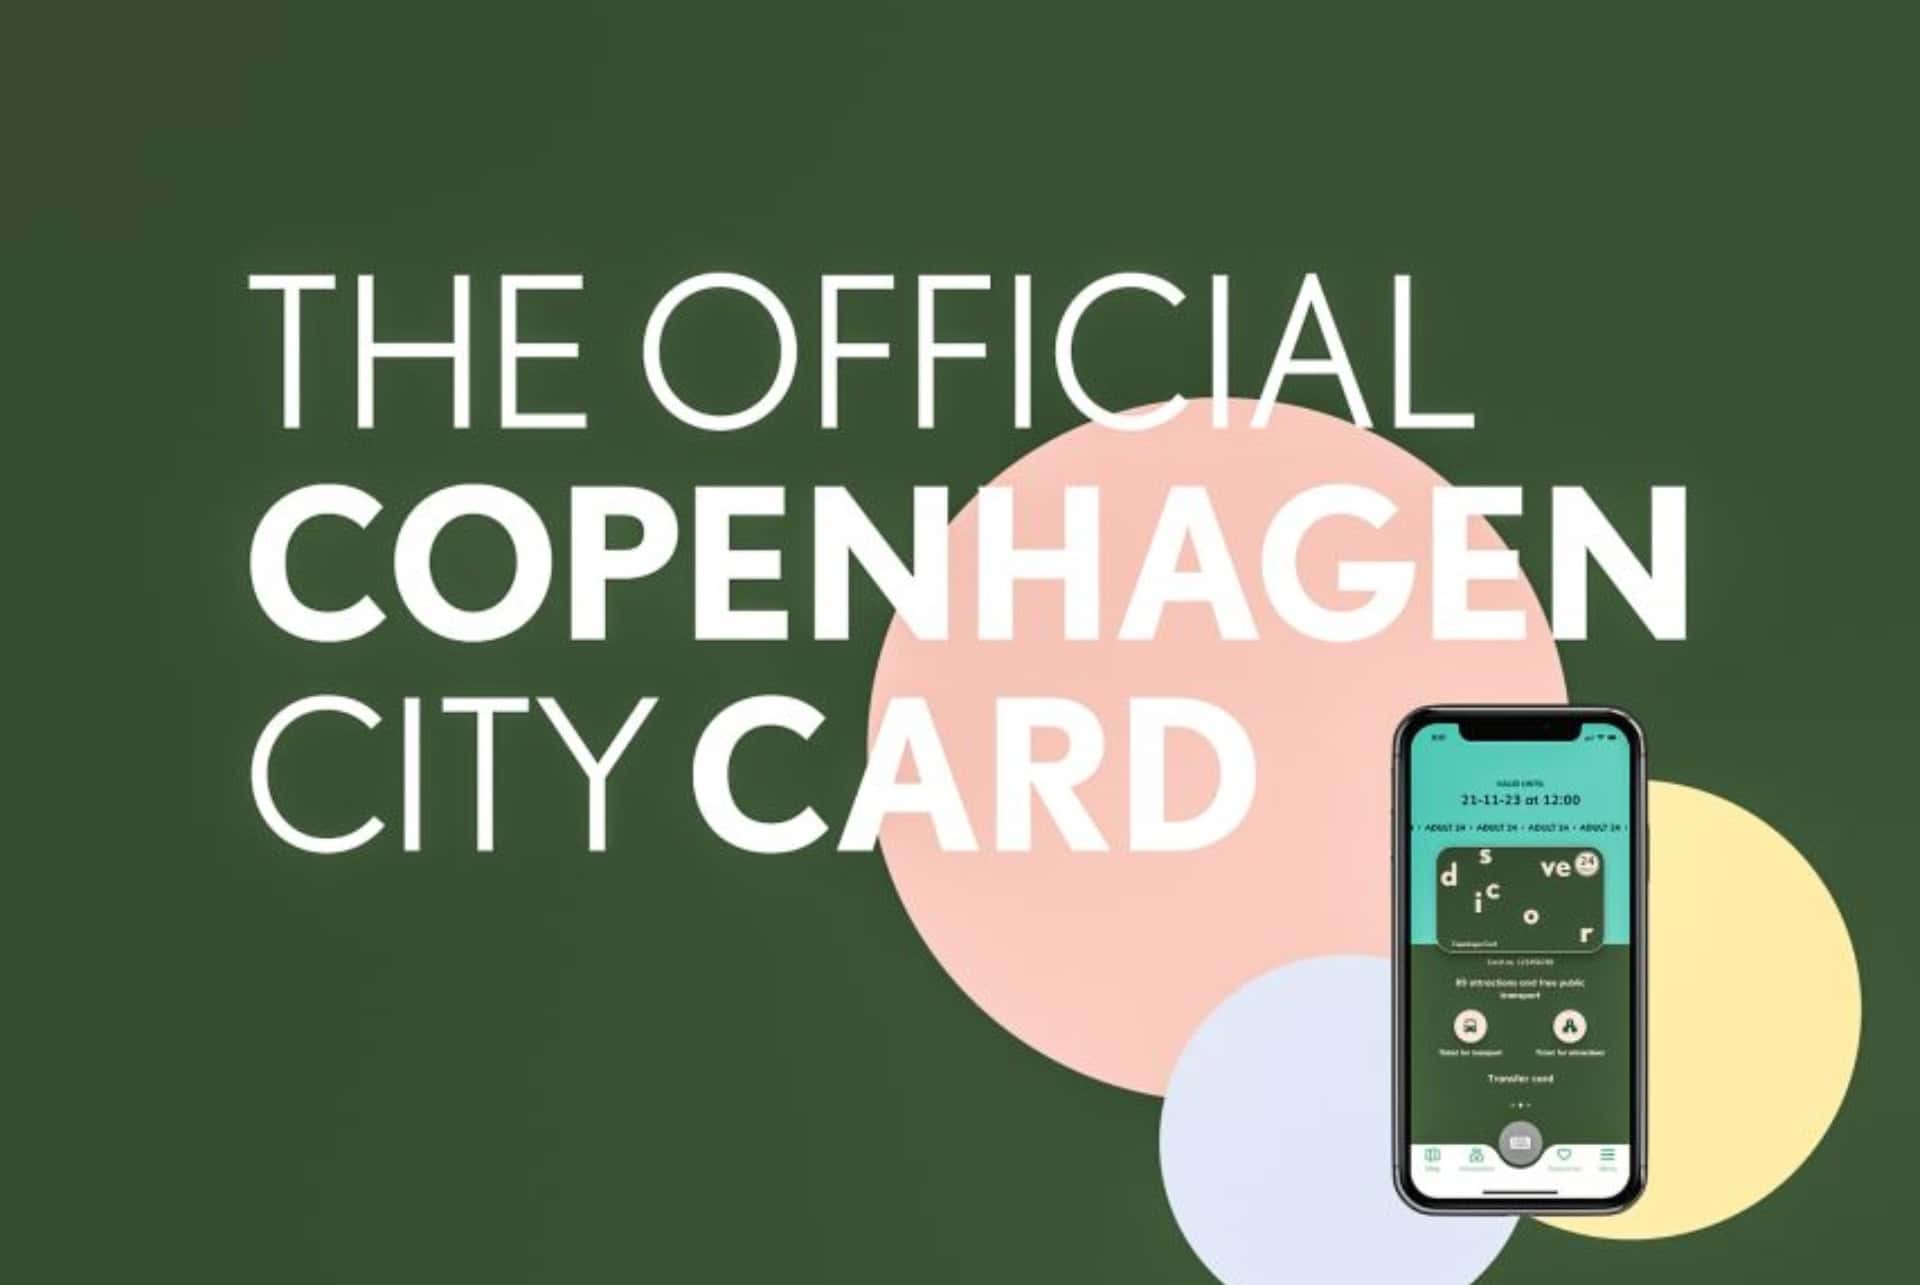 copenhagen card